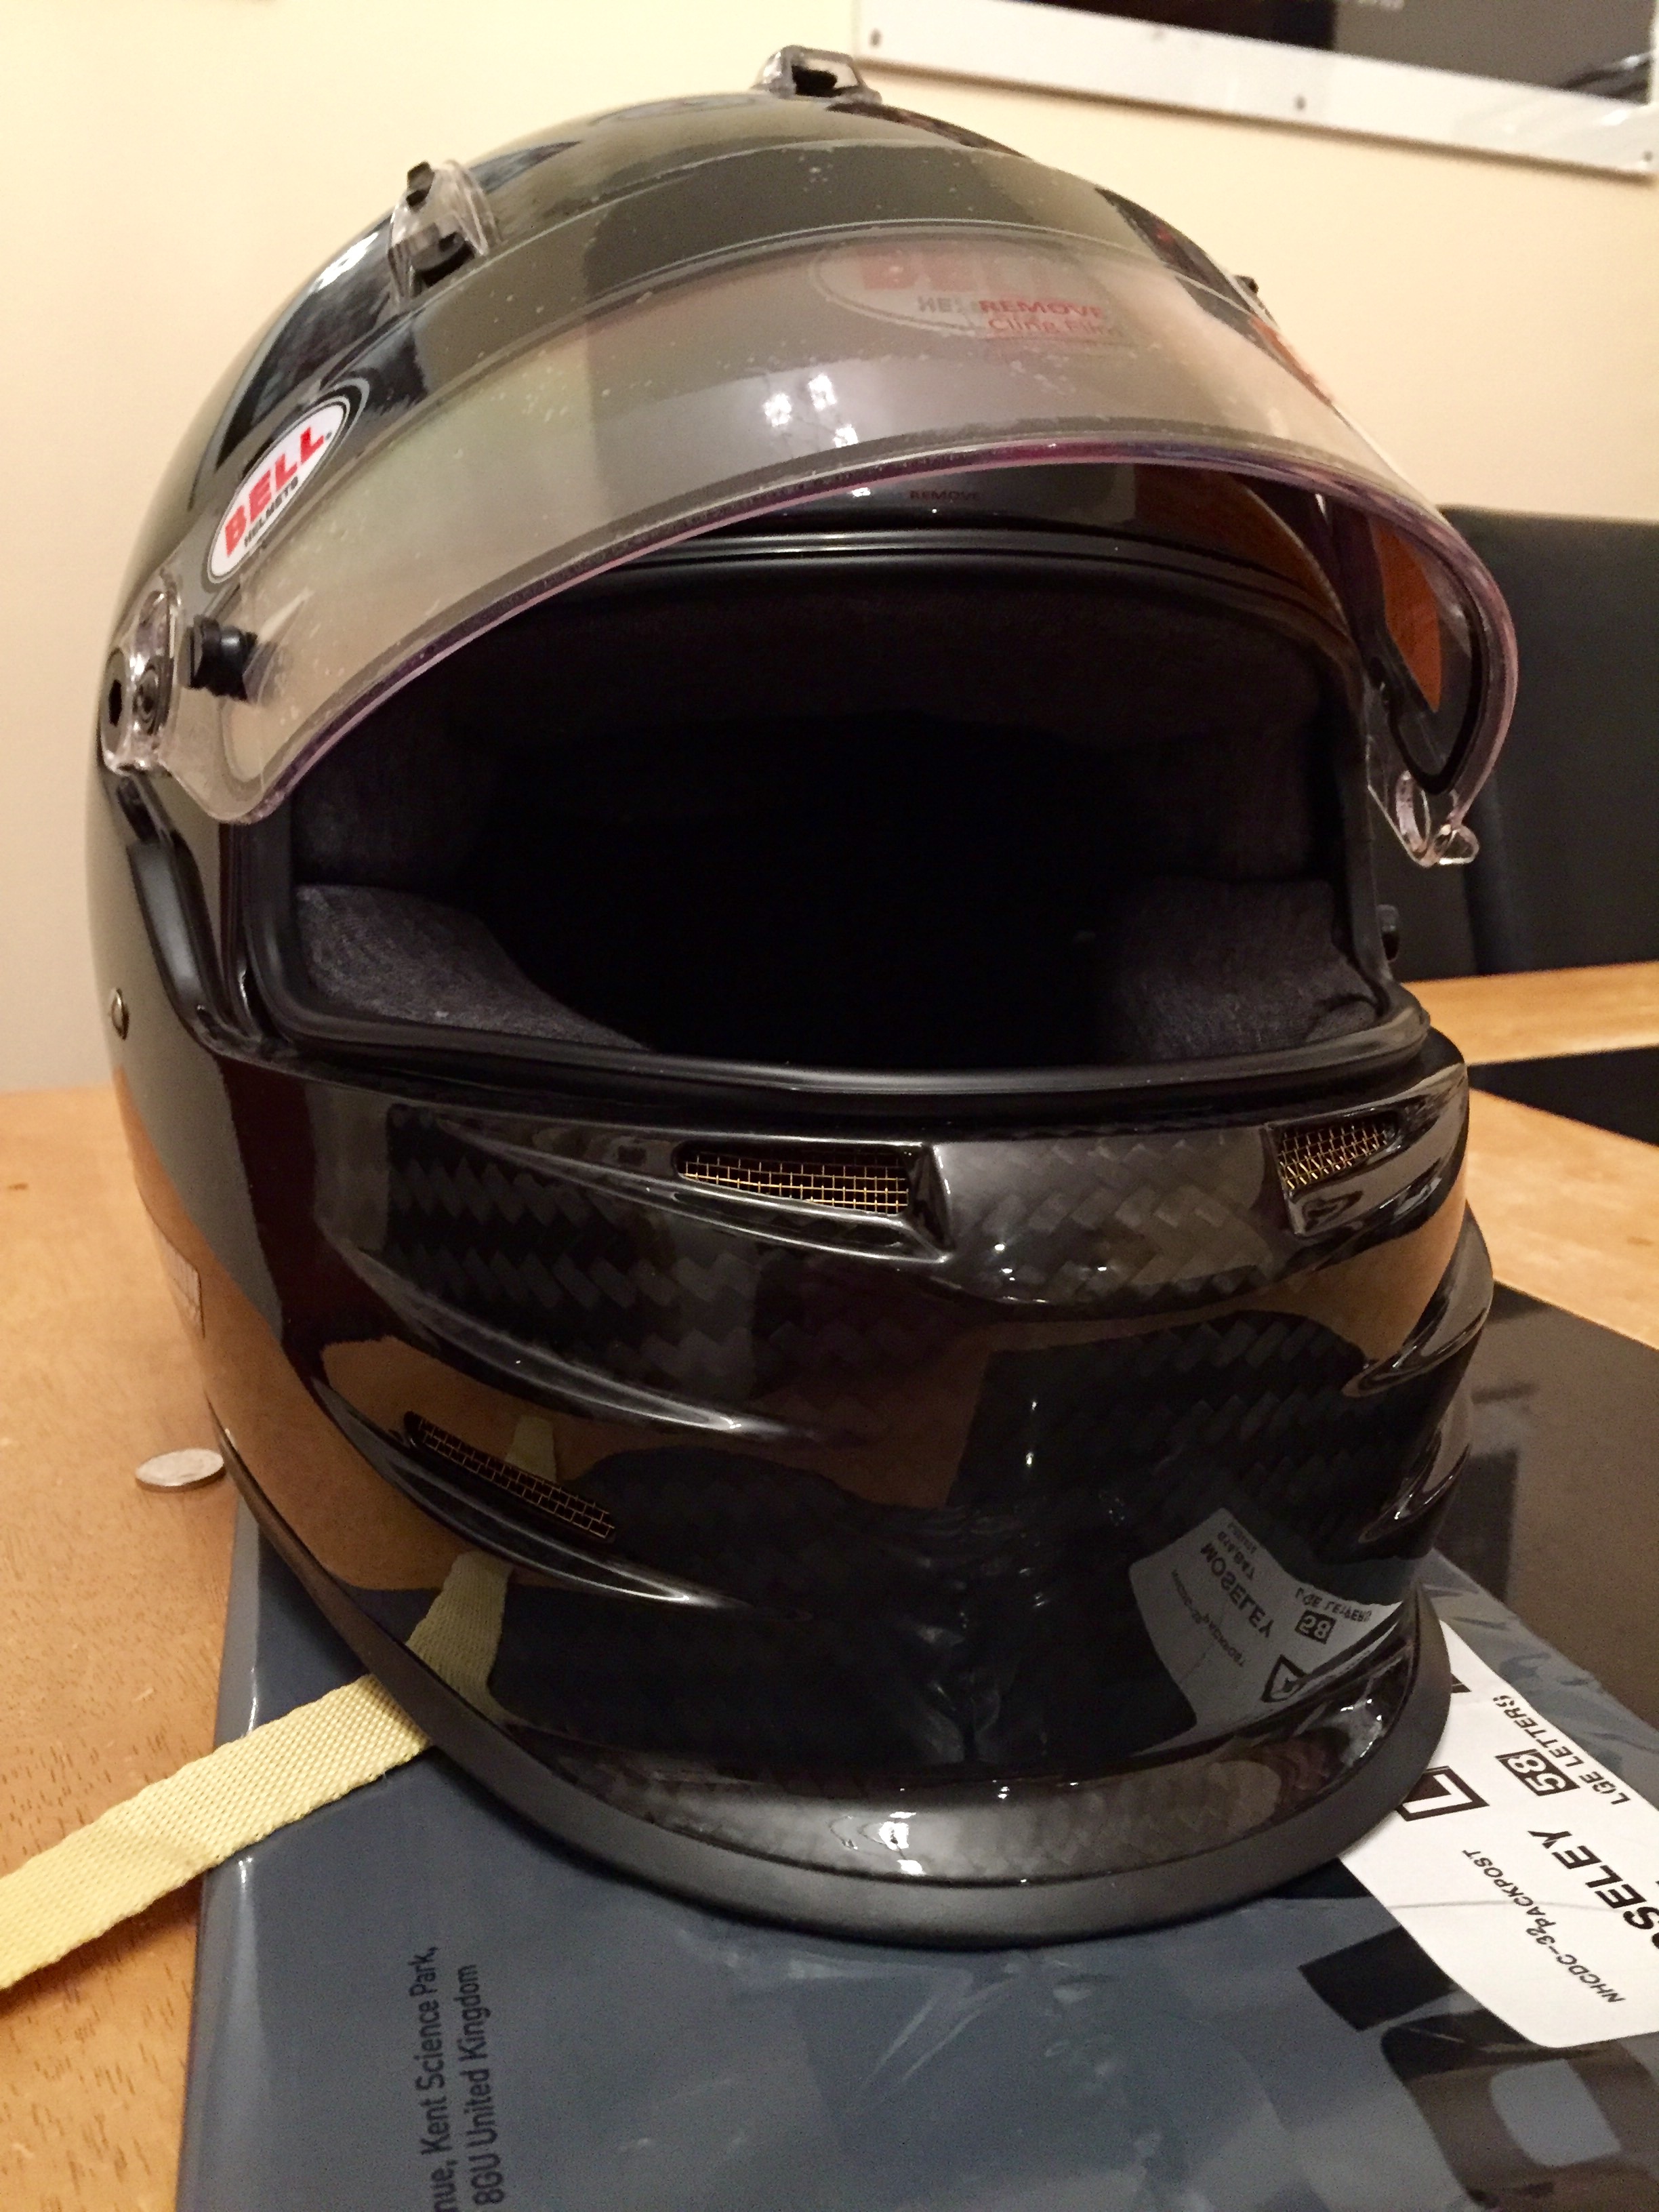 Bell Motorsport Helmet - Severe Delivery Delays? - Page 2 - General Gassing - PistonHeads